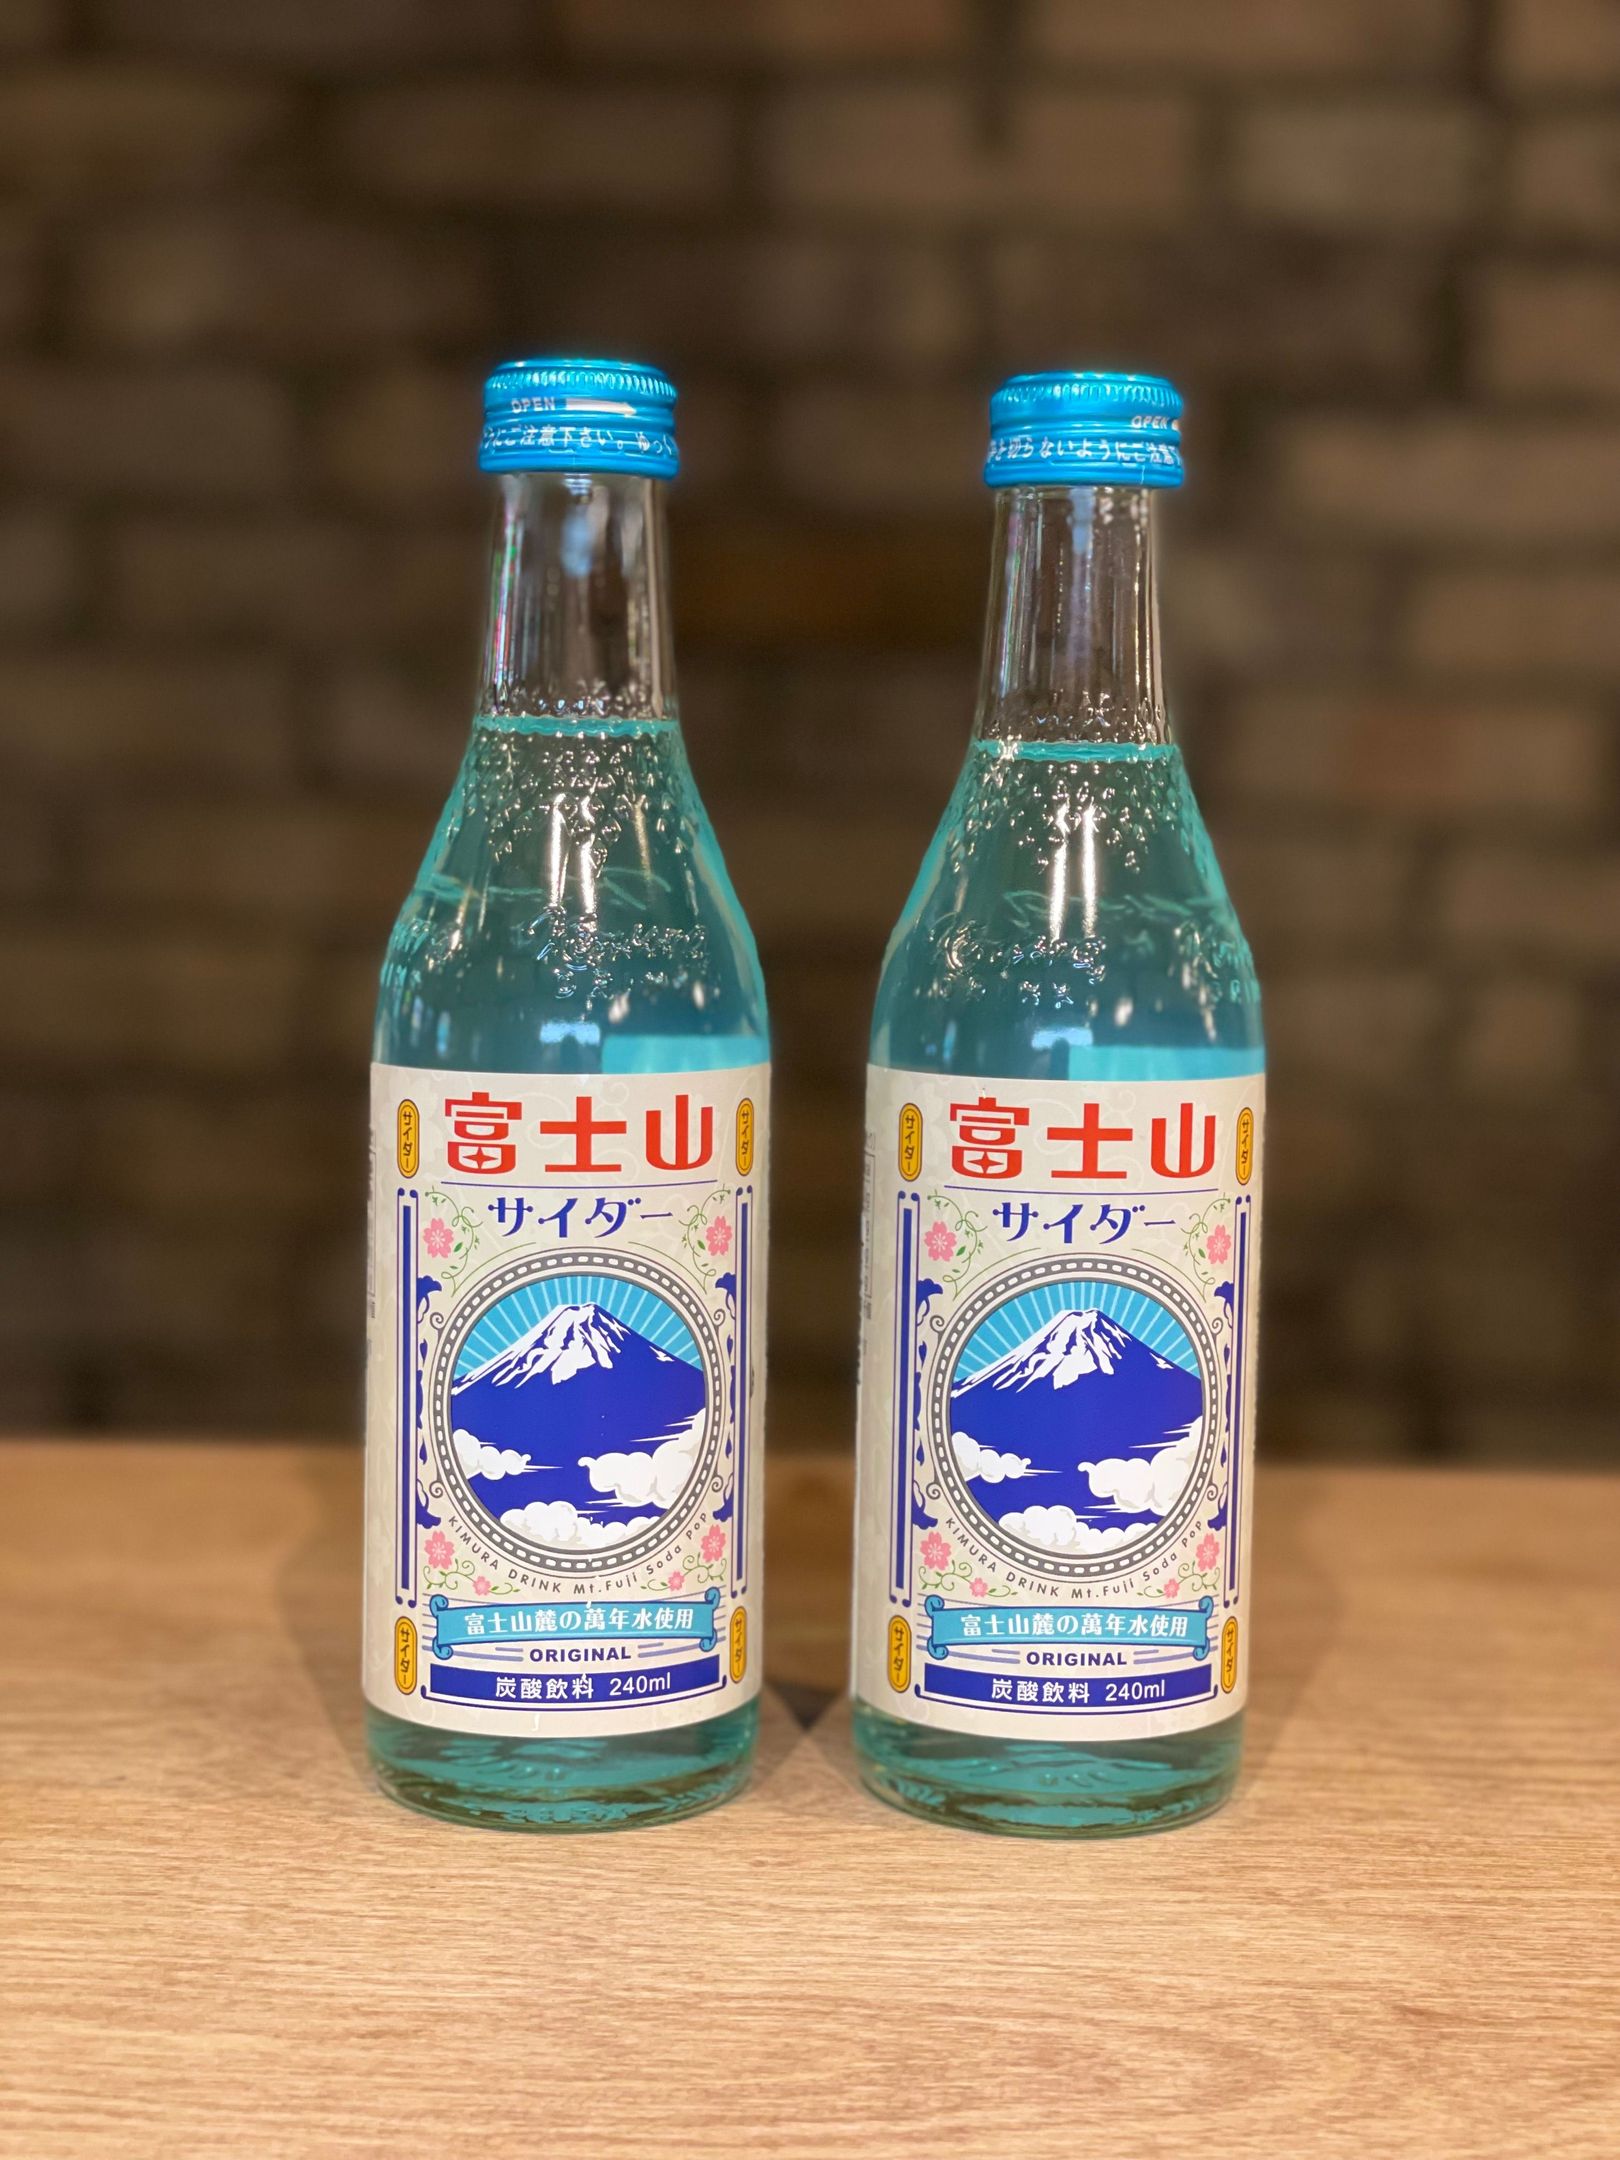 Kimura Fuji Cider